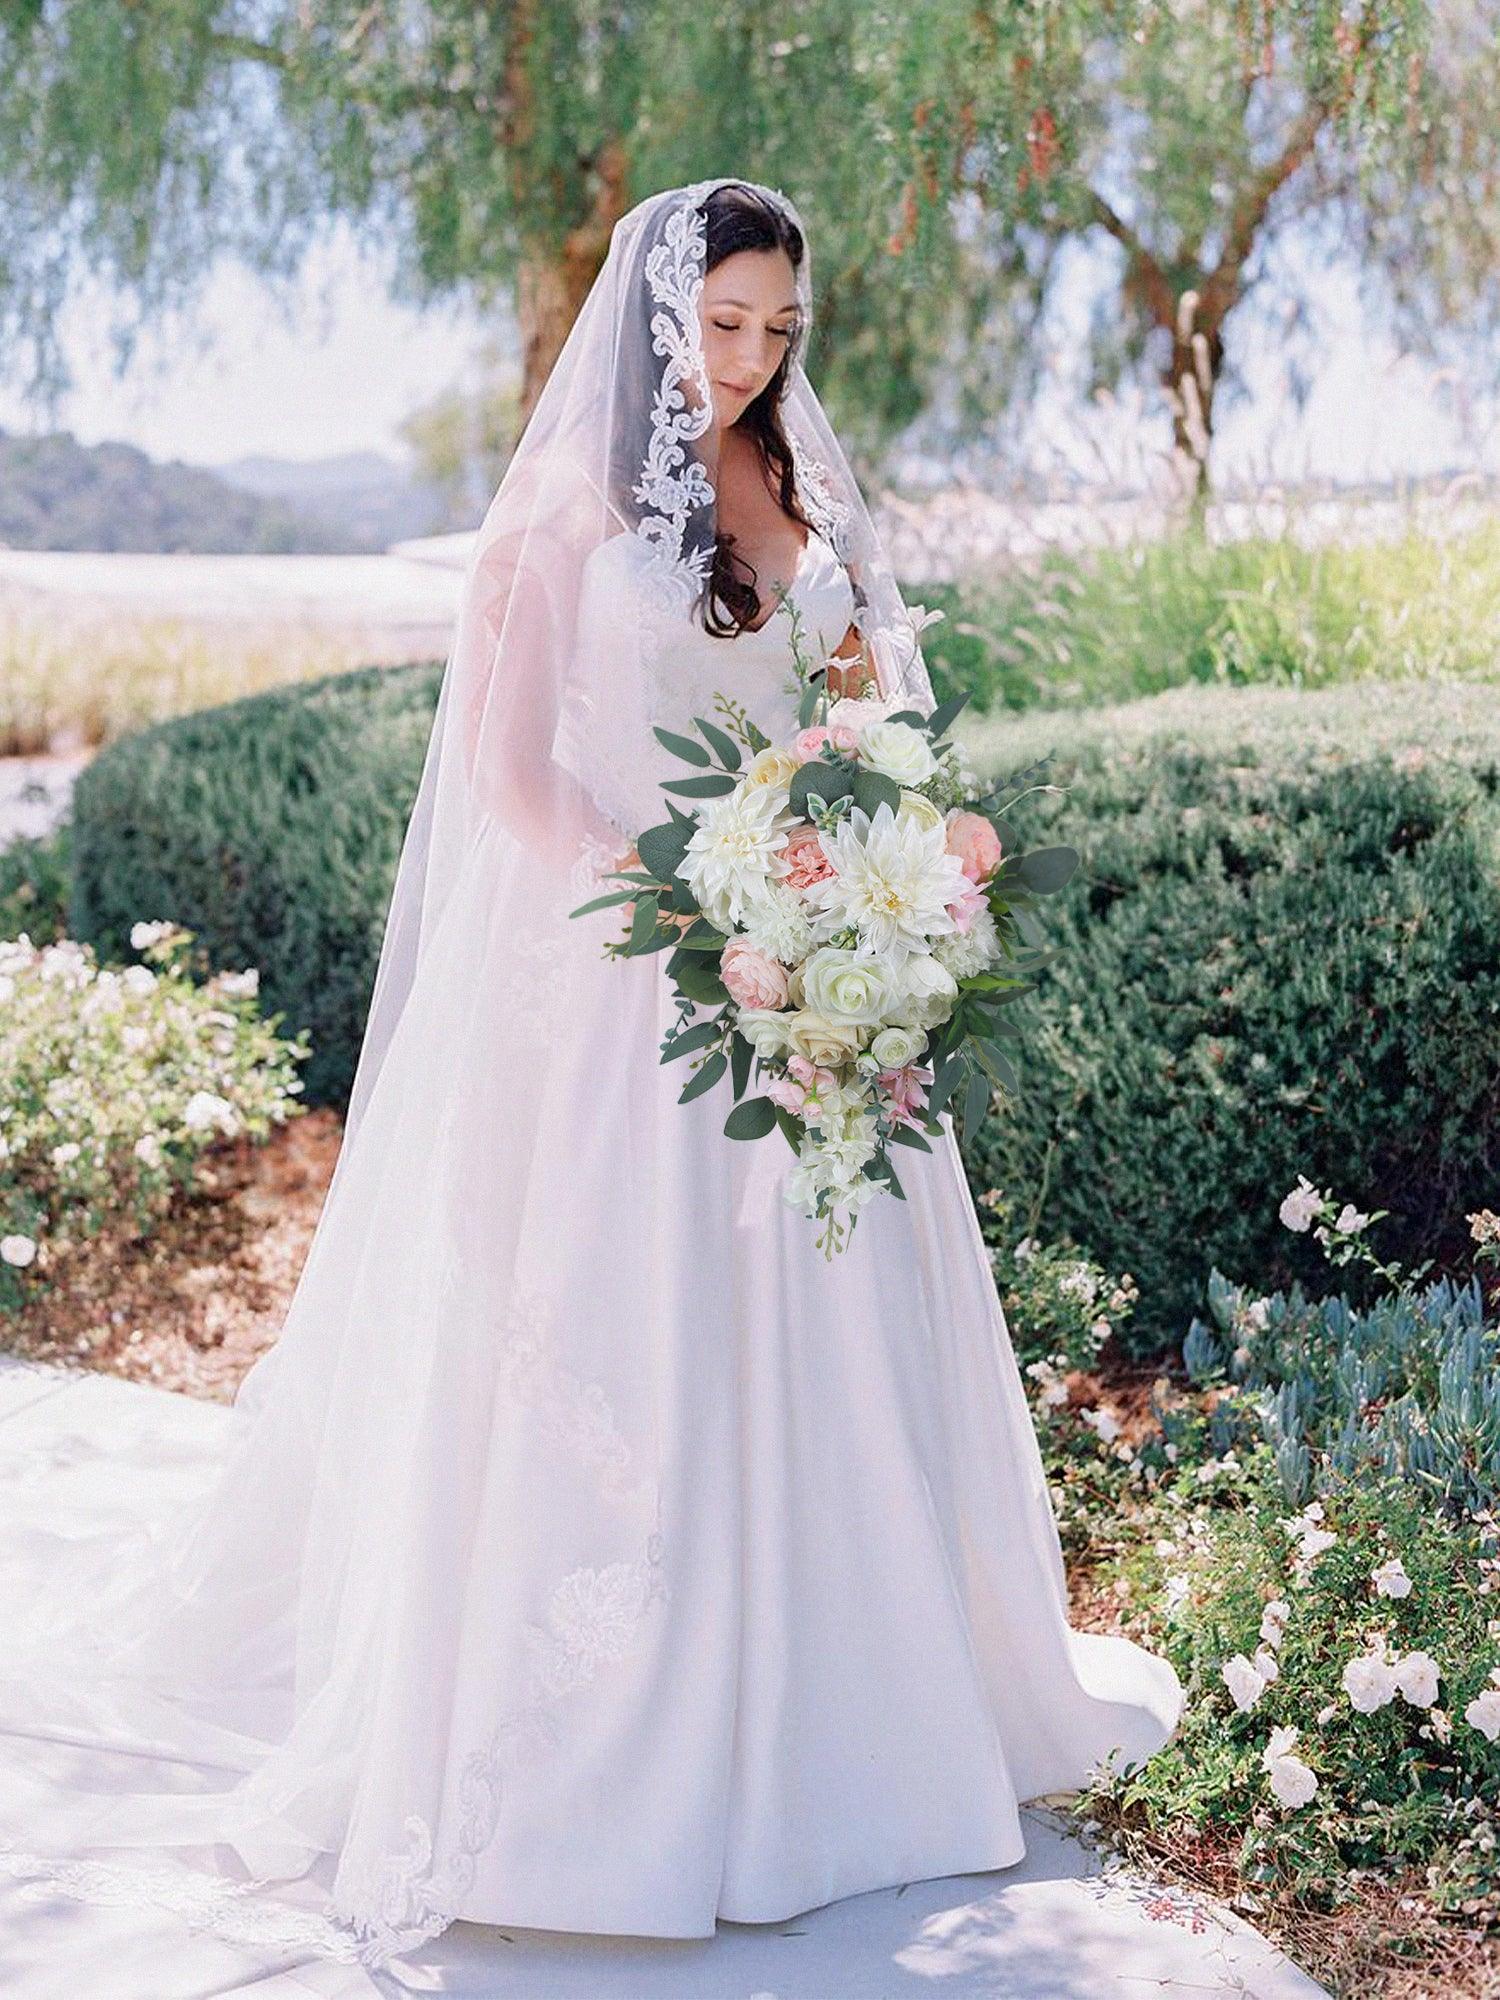 11 inch wide Blush & White Cascading Bridal Bouquet - Rinlong Flower